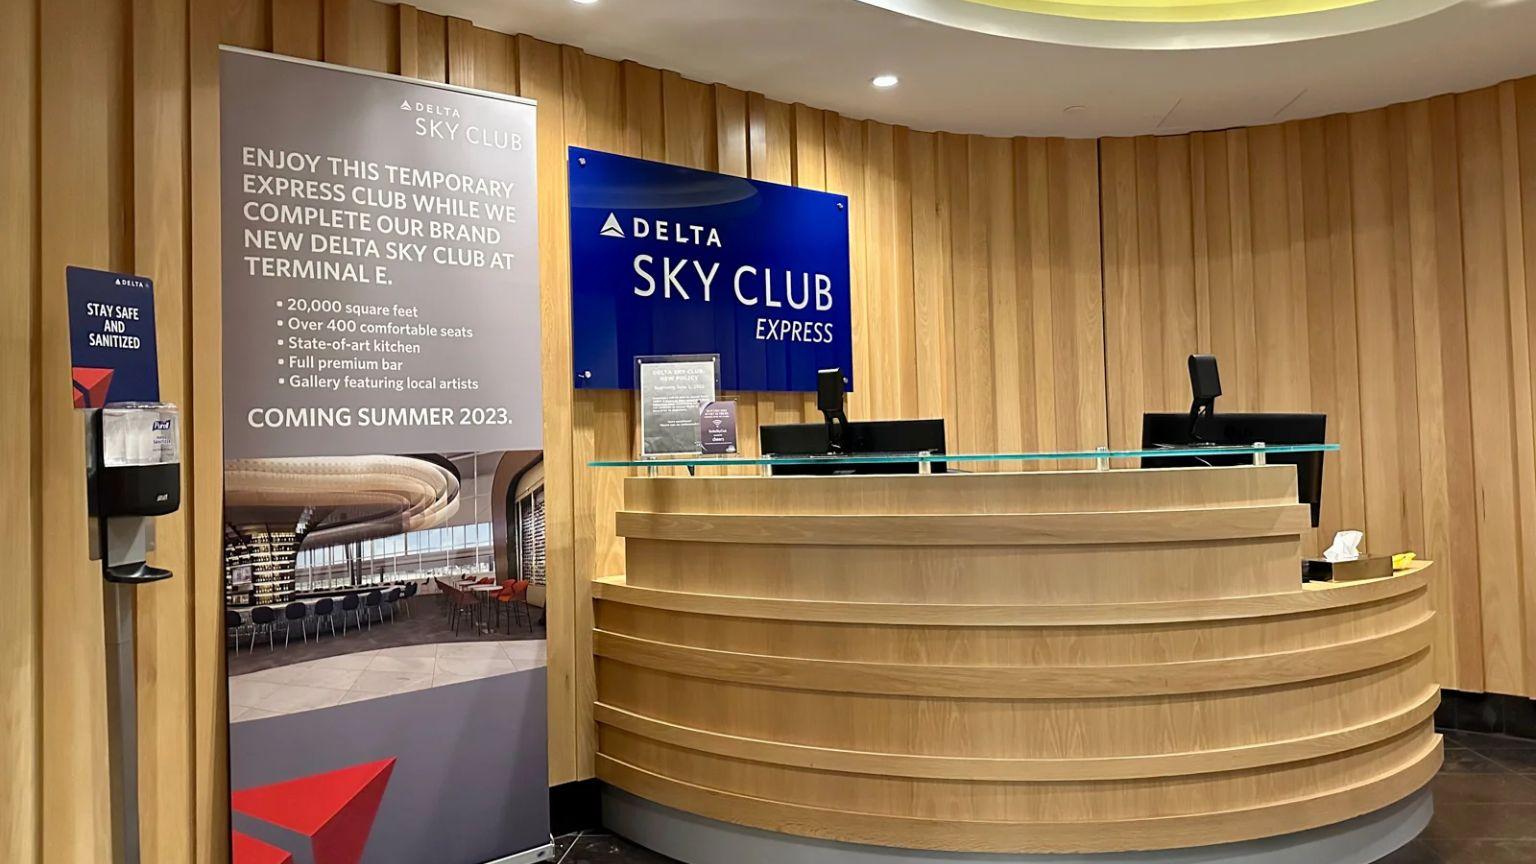 Delta Sky Club Express Boston Lounge, Terminal E